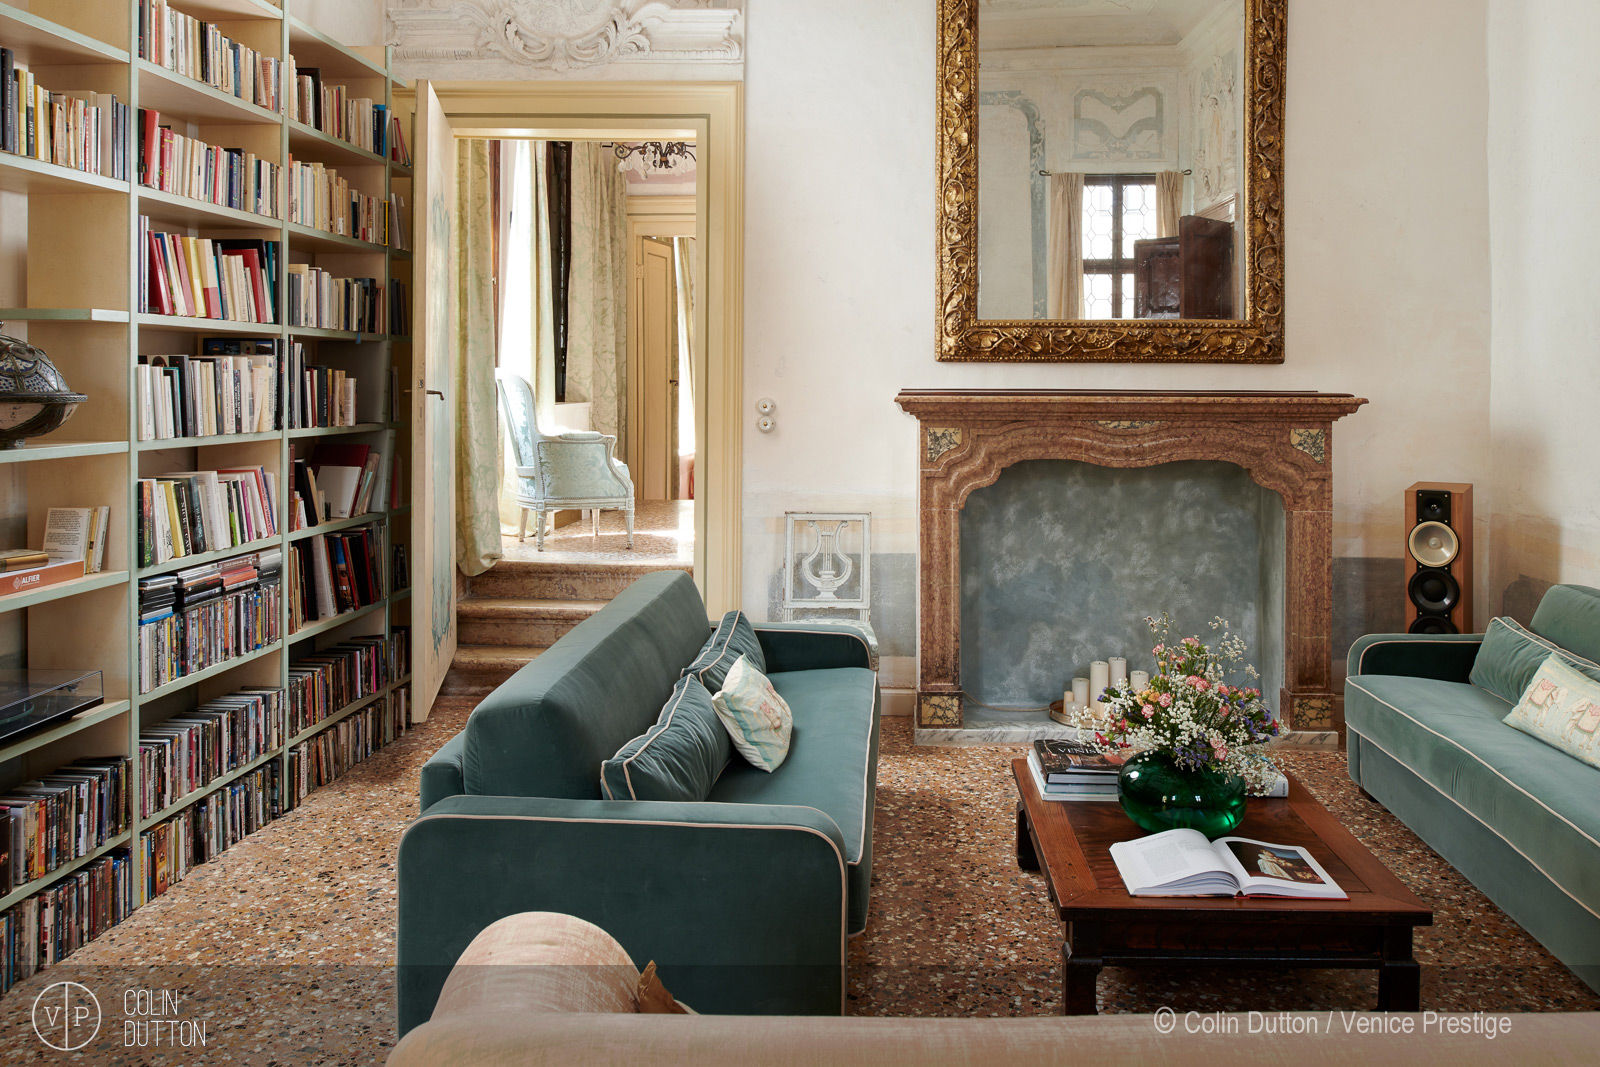 . Colin Dutton Living room Living room, venetian, historical, classic, period furniture, divan, green, sofa, cushions, fireplace, mirror